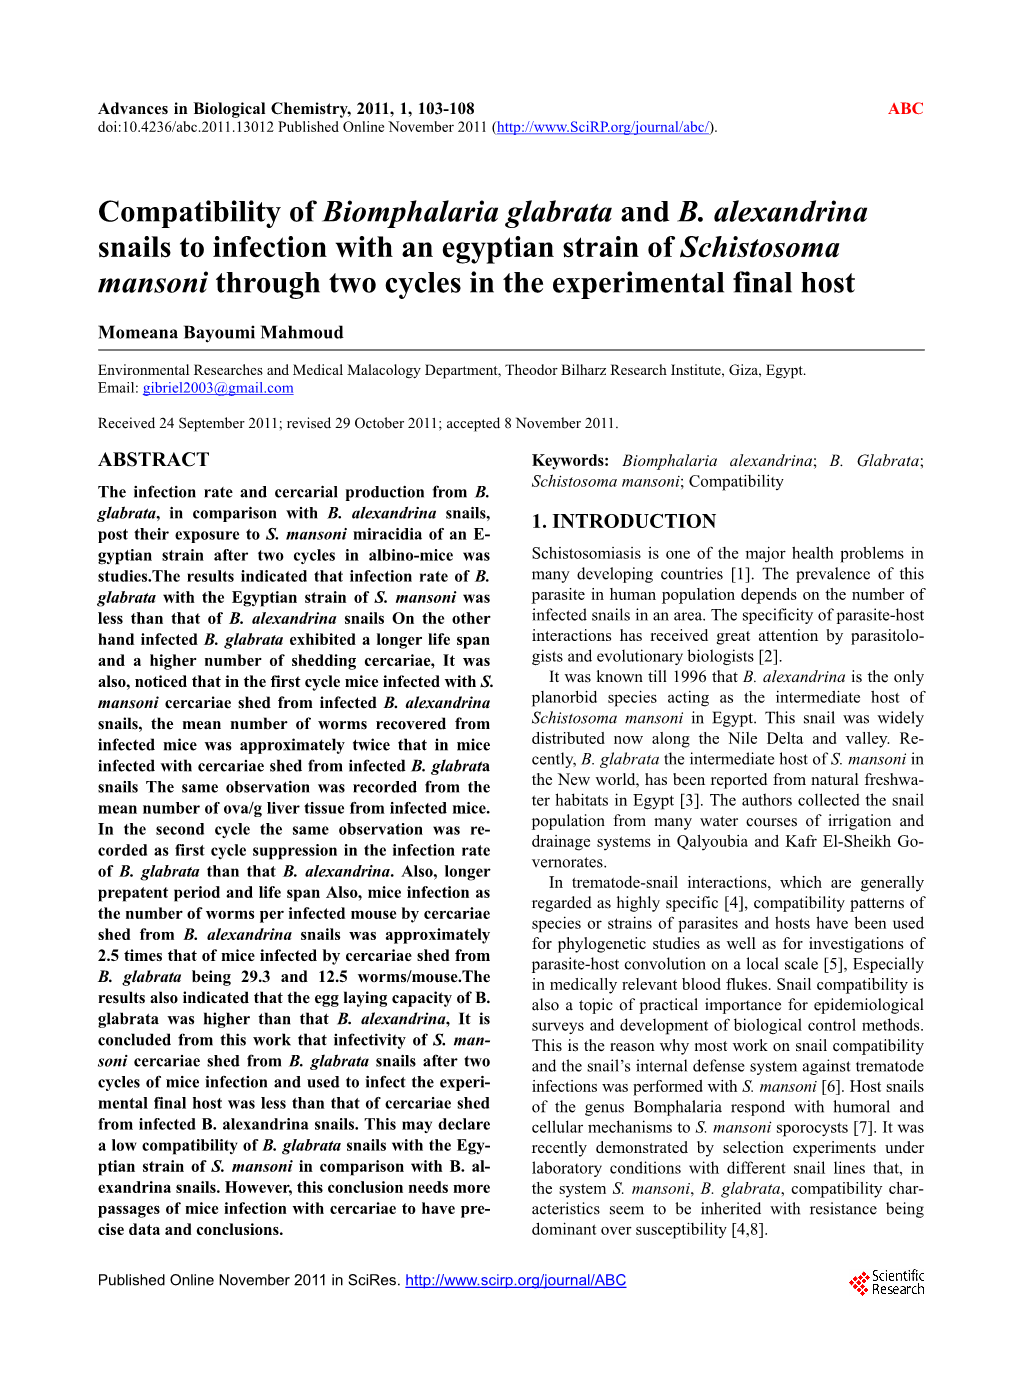 Compatibility of Biomphalaria Glabrata and B. Alexandrina Snails To